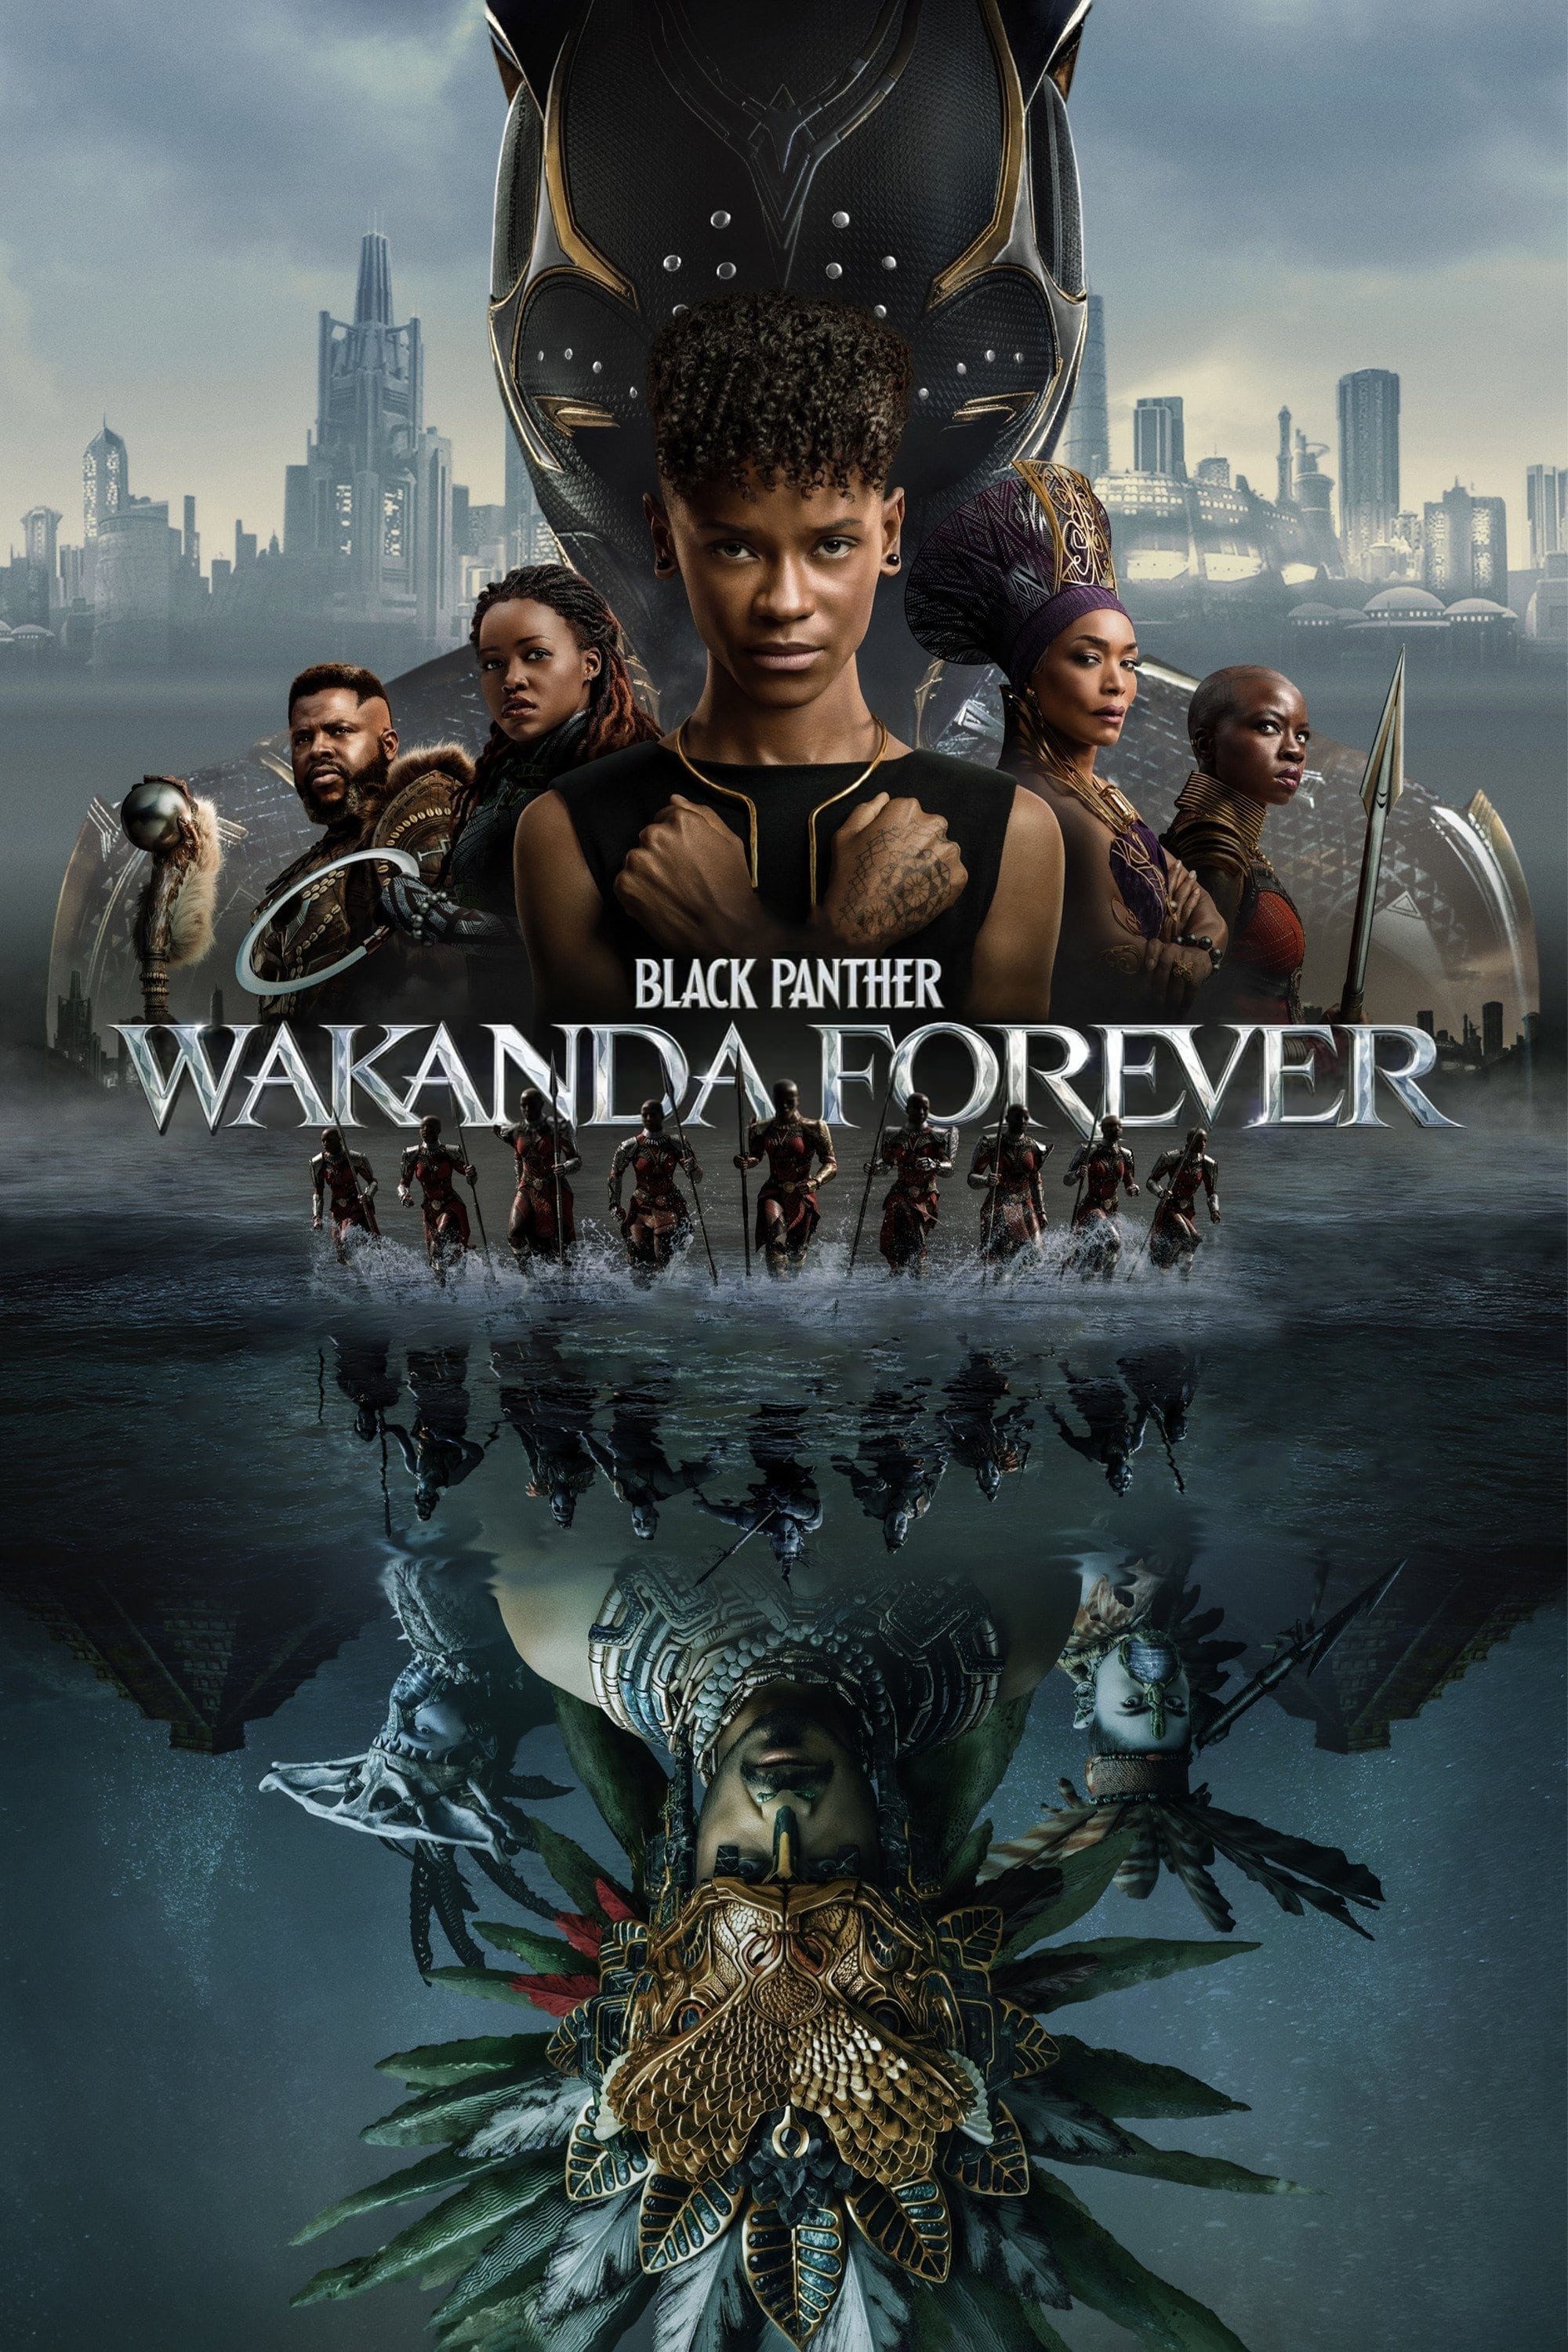 Black Panther: Wakanda Forever Plot Synopsis